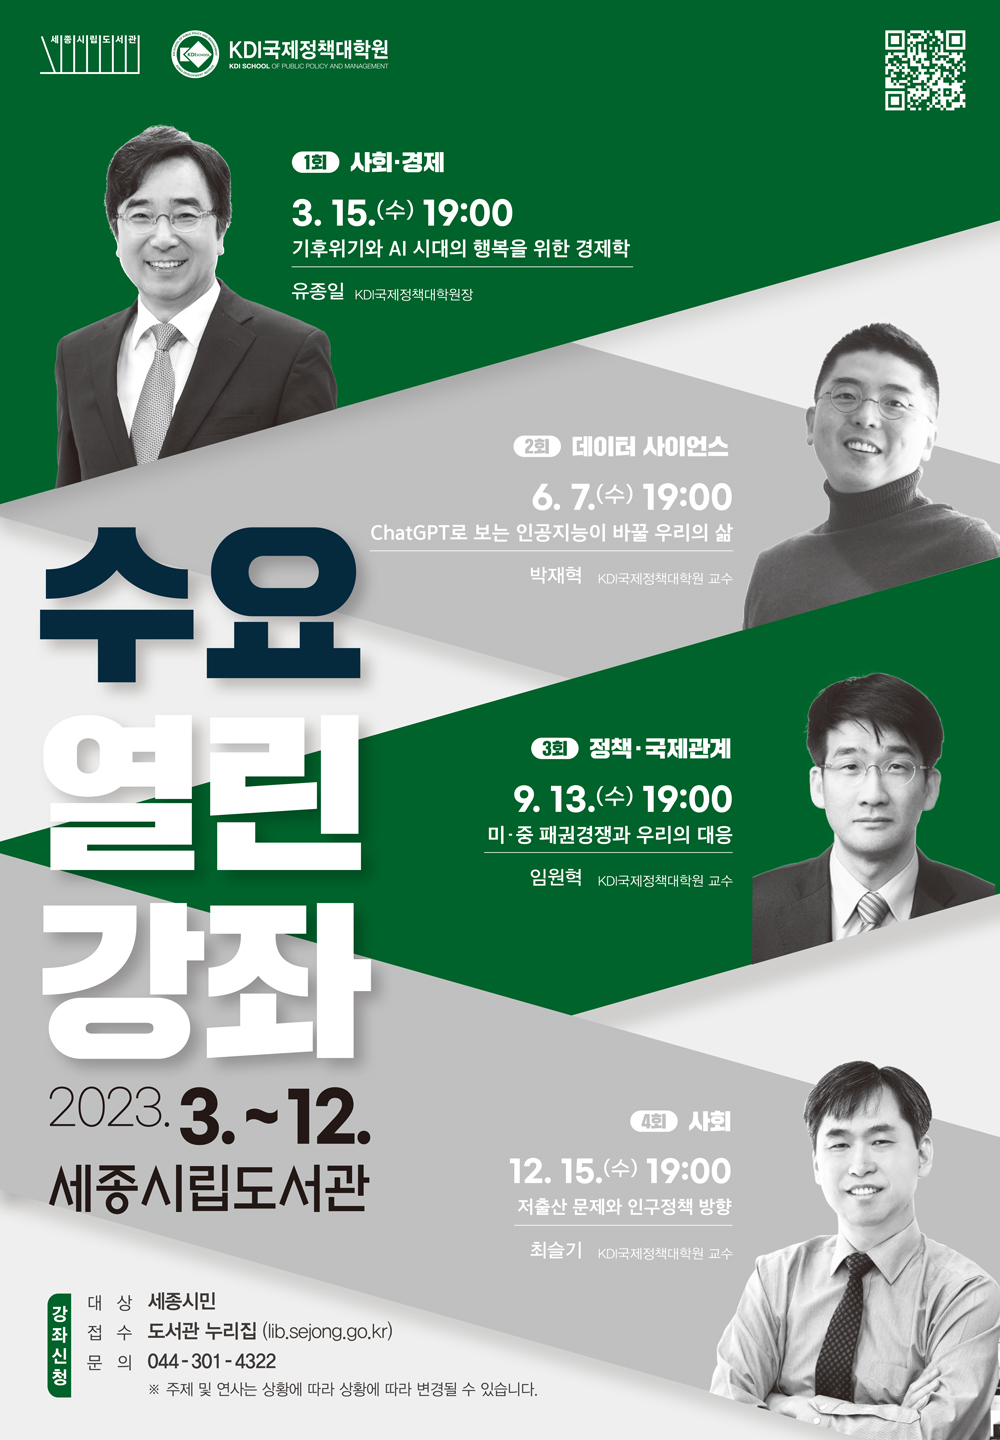 [Invitation] KDI대학원-세종시립도서관 <제3회 수요열린강좌> (9월 13일(수) 오후 7시)